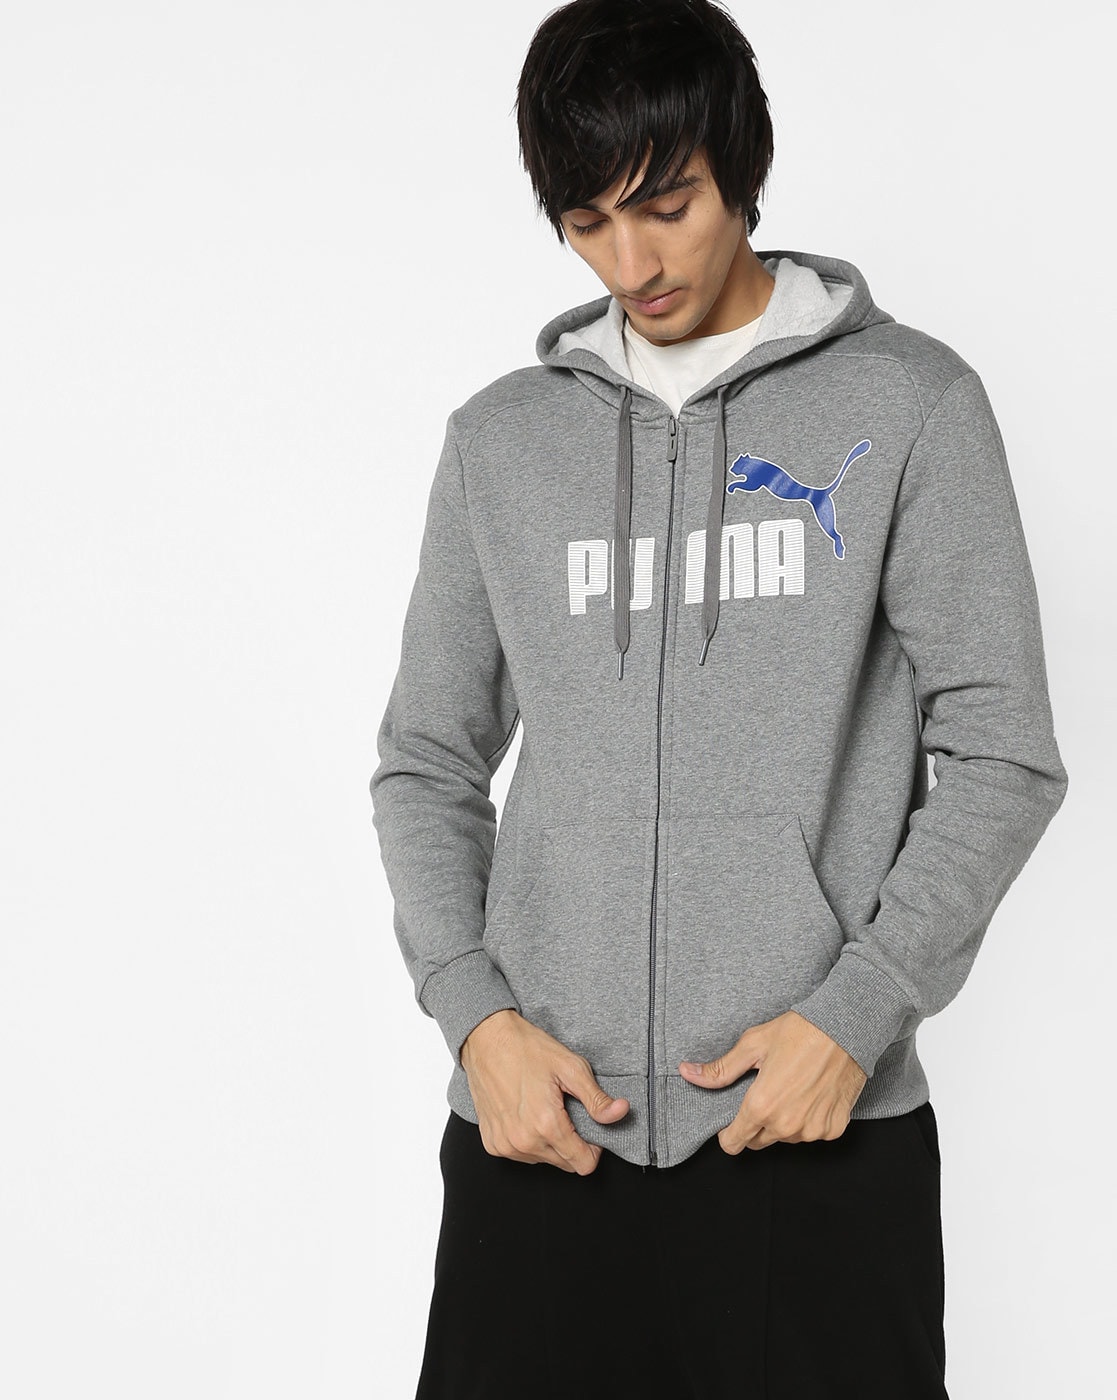 buy puma sweatshirts online